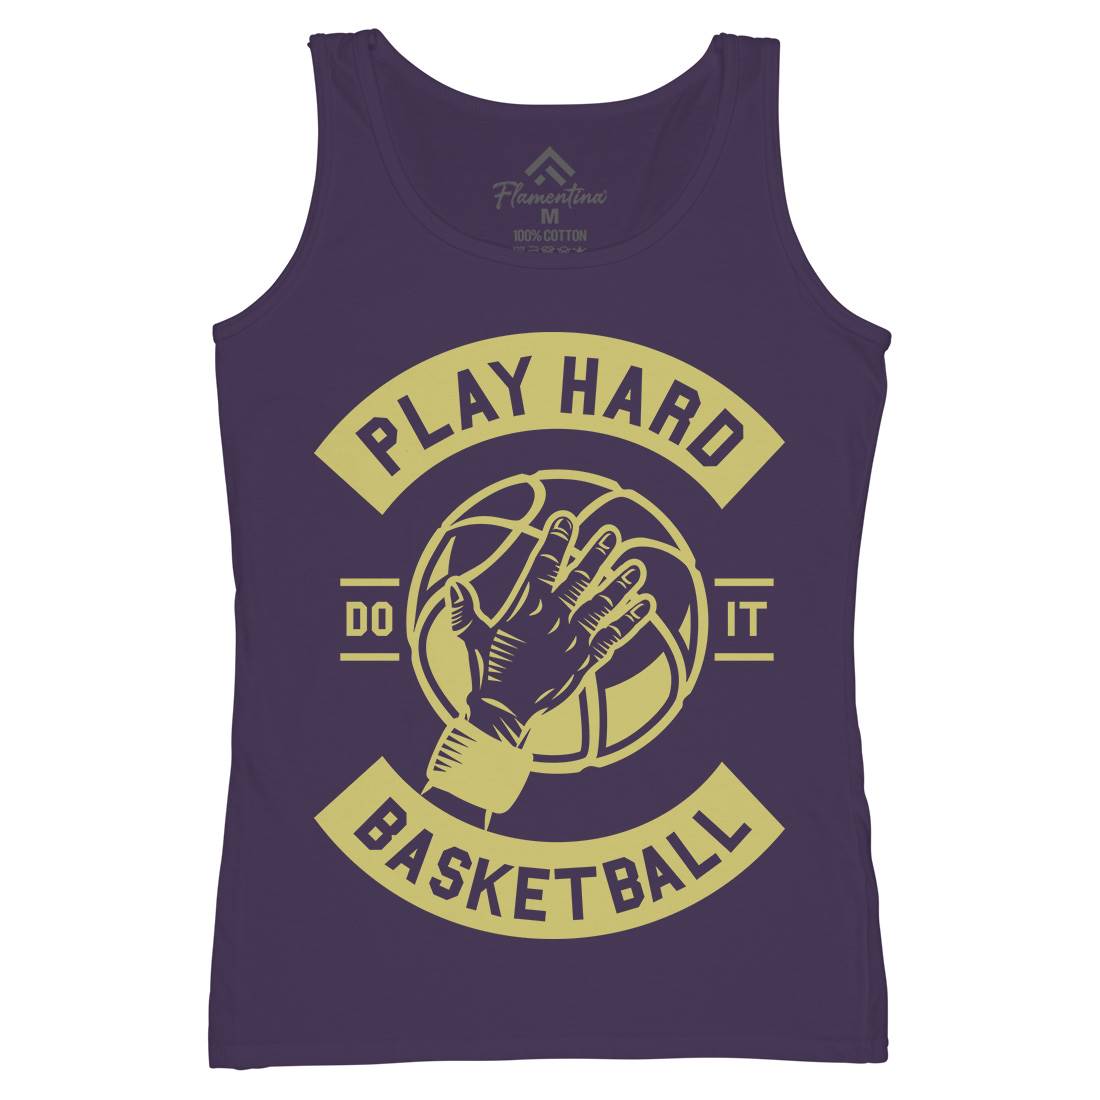 Play Hard Basketball Womens Organic Tank Top Vest Sport A261